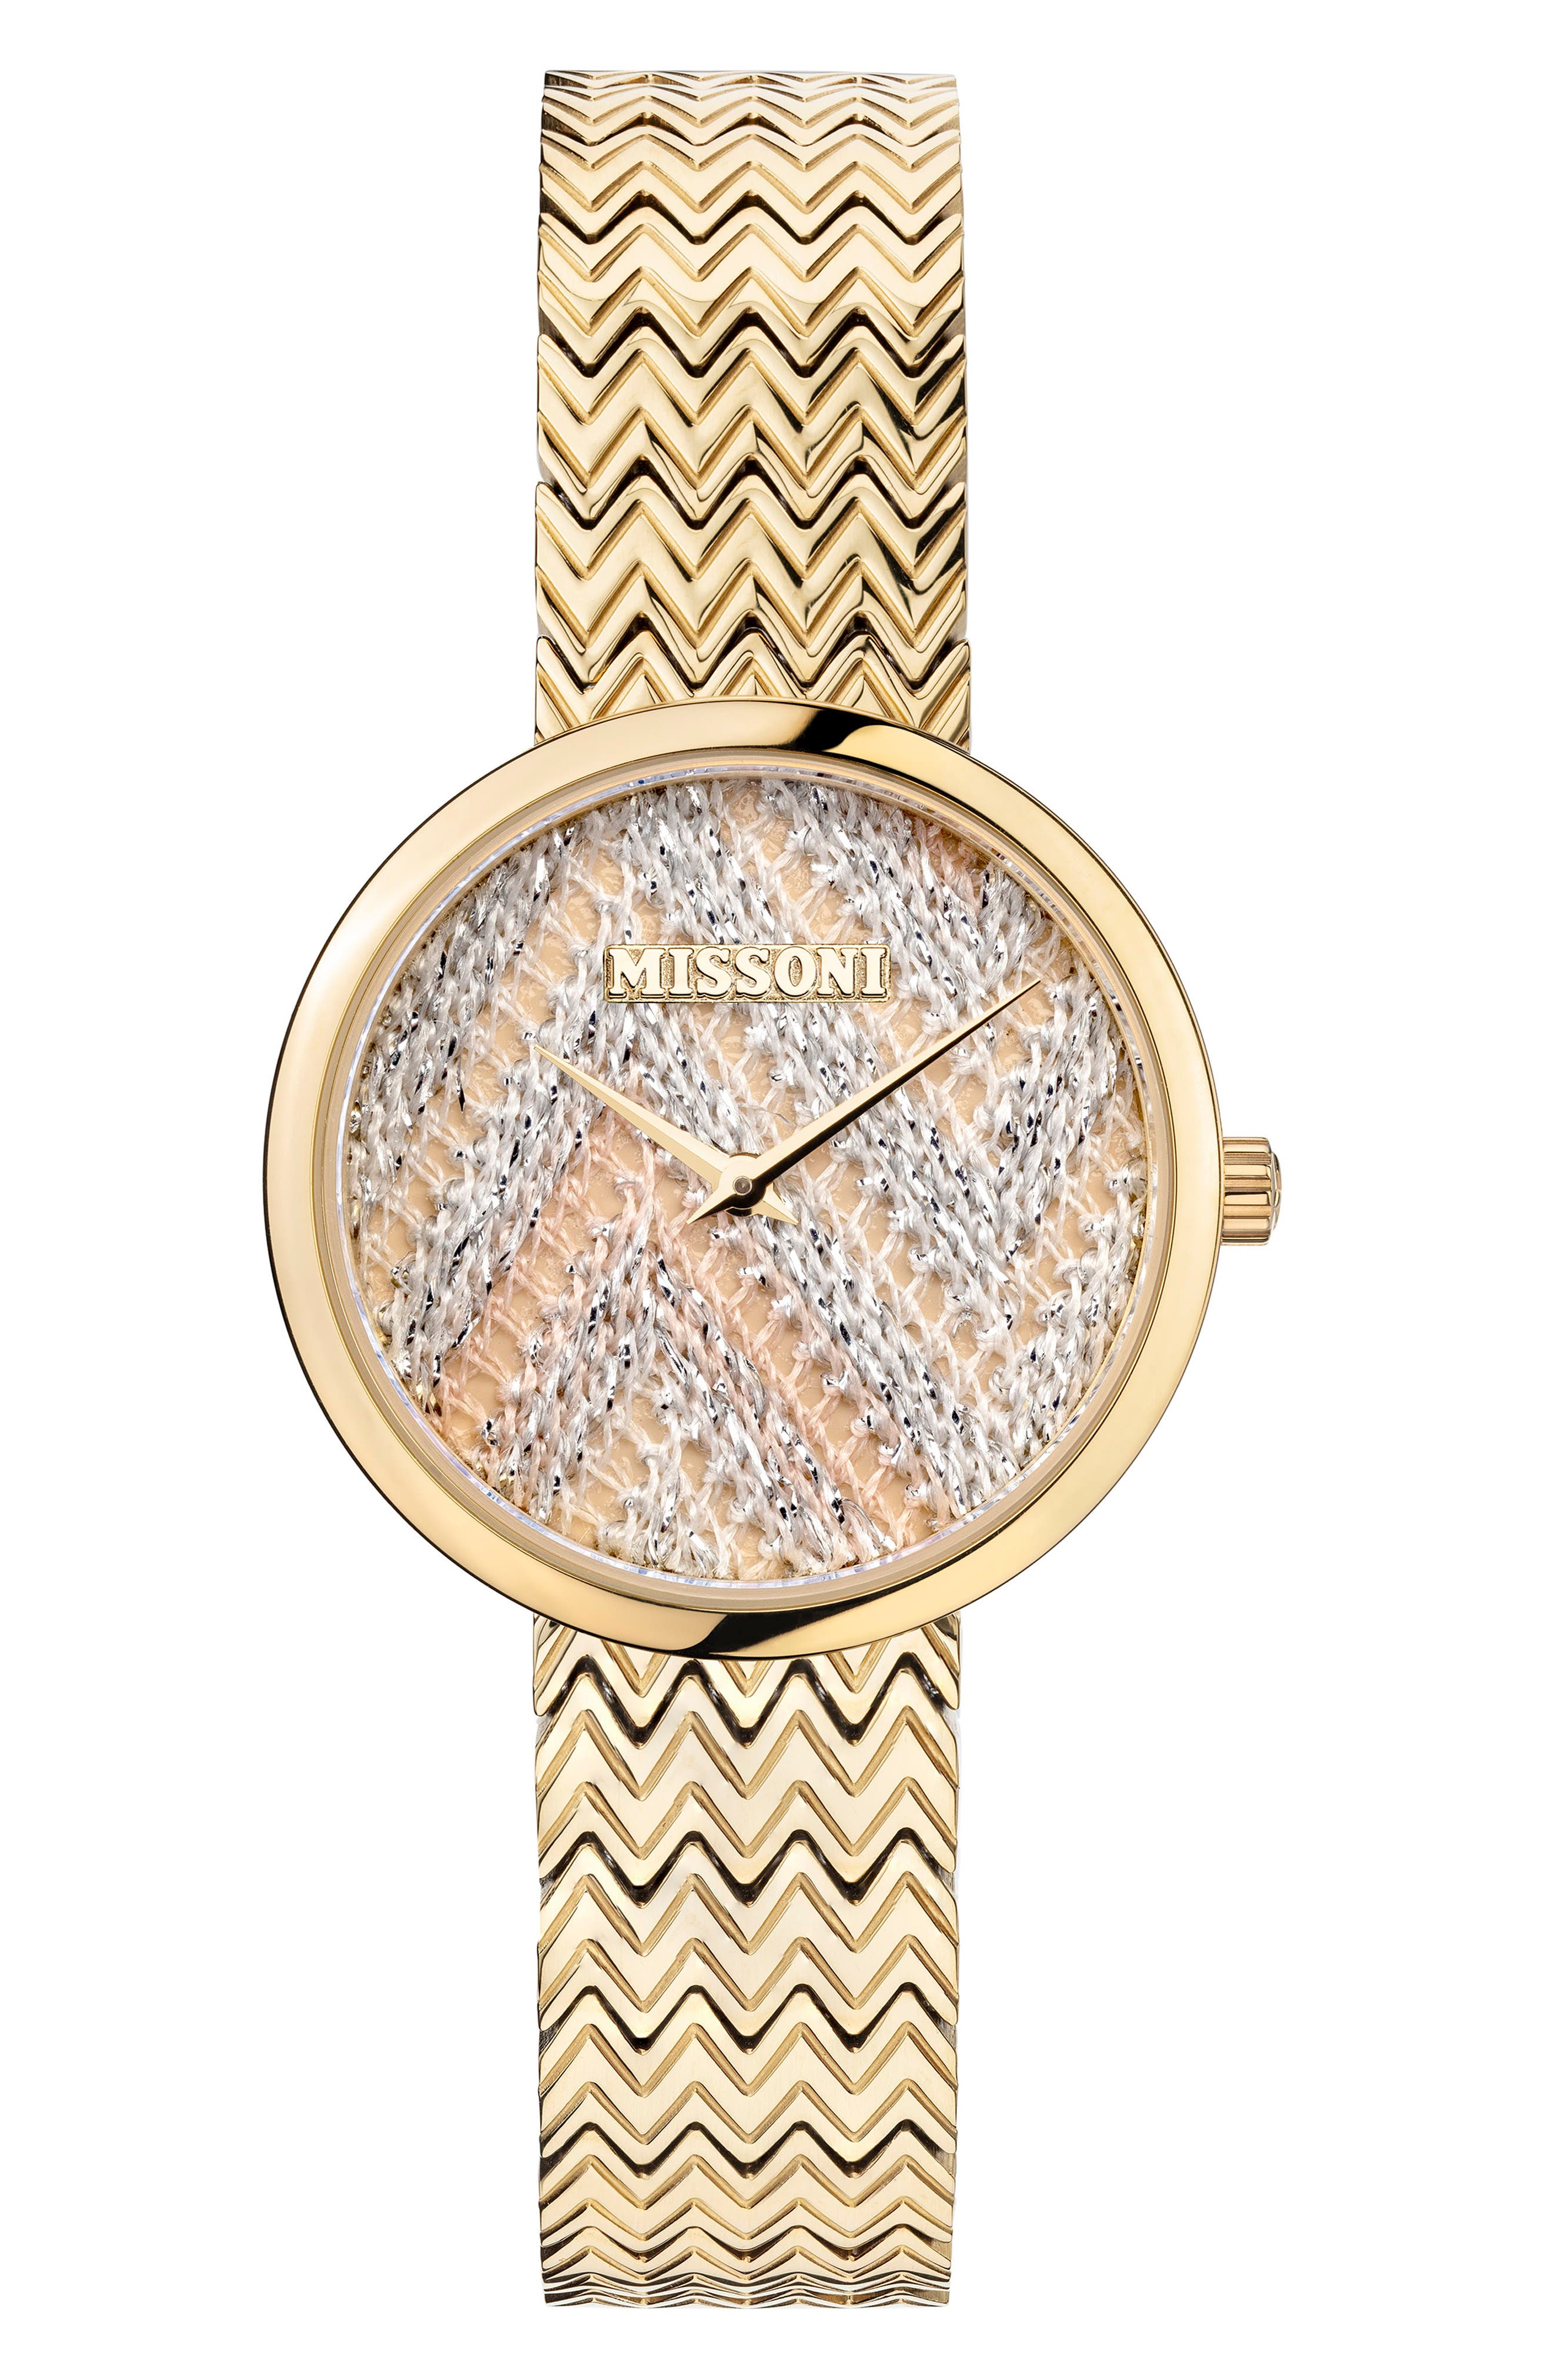 Missoni M1 Joyful Knit Dial Bracelet Watch & Leather Strap Gift Set, 34mm in Champagne /Multicolor at Nordstrom